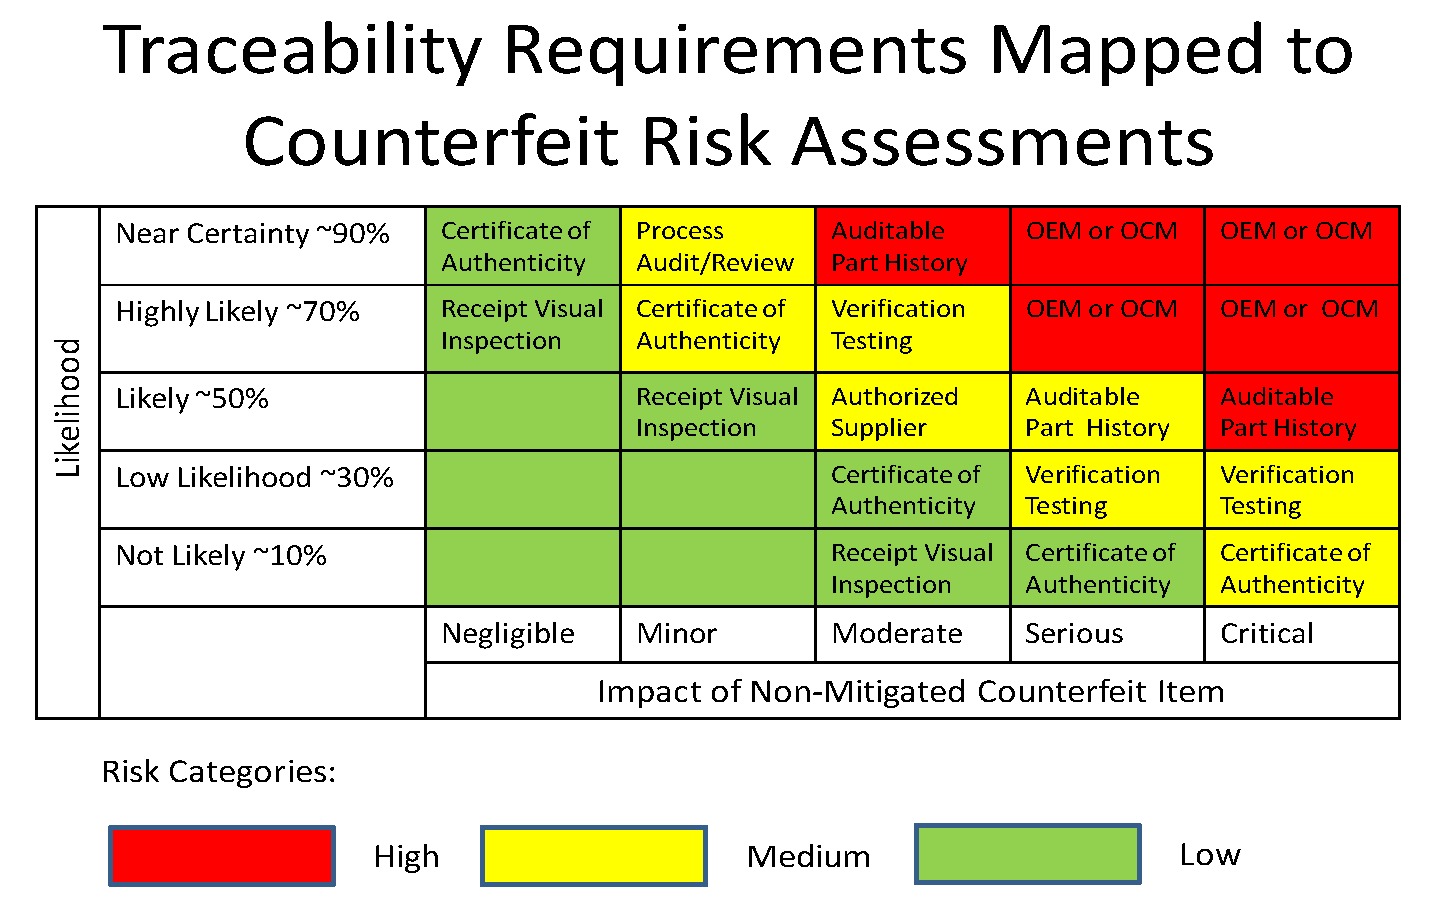 Risk Analysis Chart Template